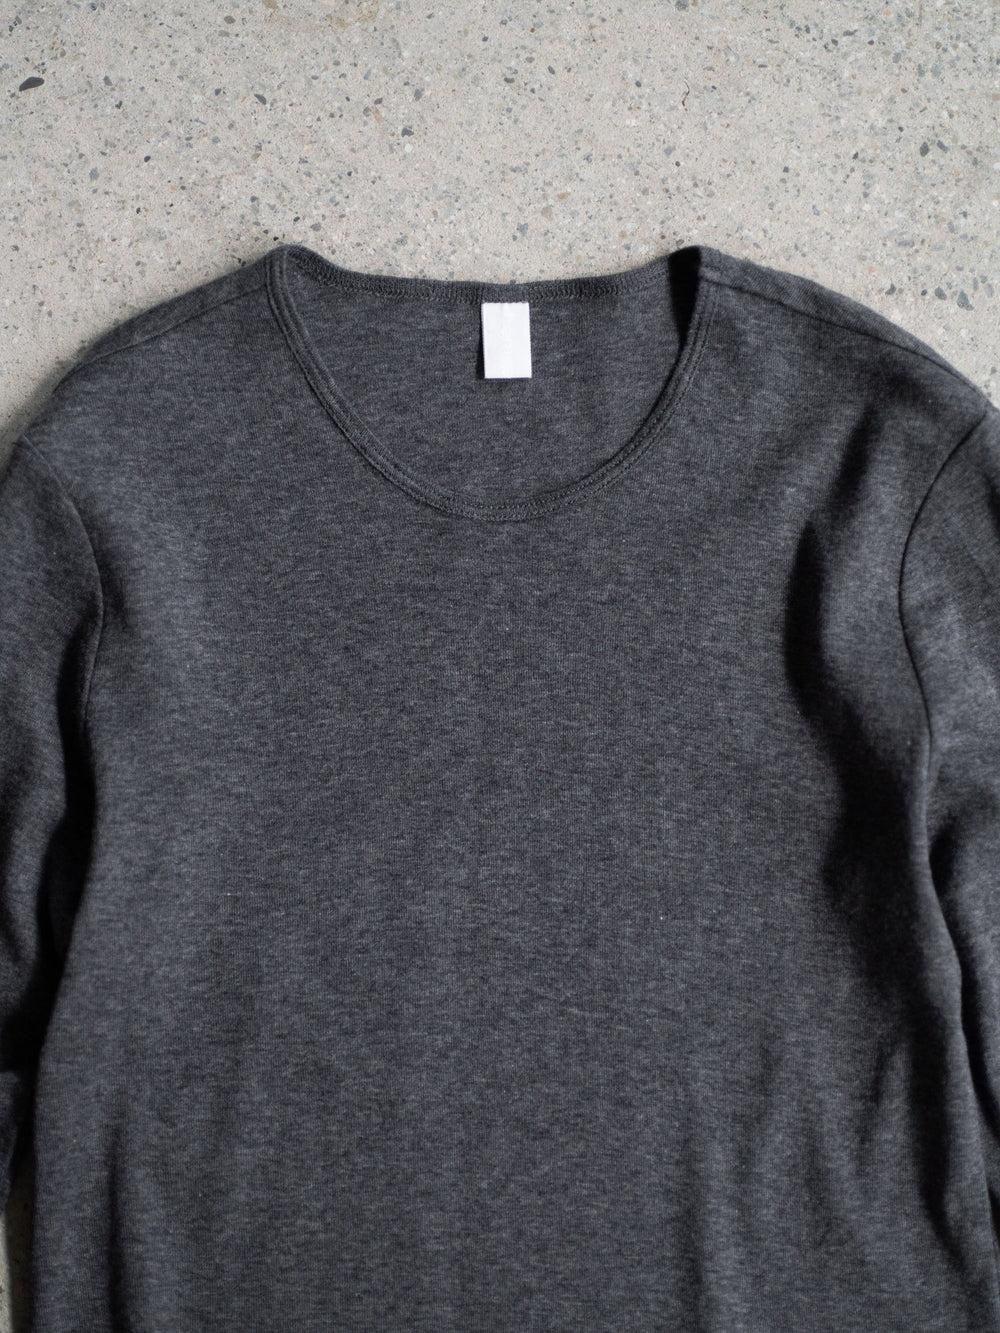 Thin Cotton Crewneck Shirt - Charcoal